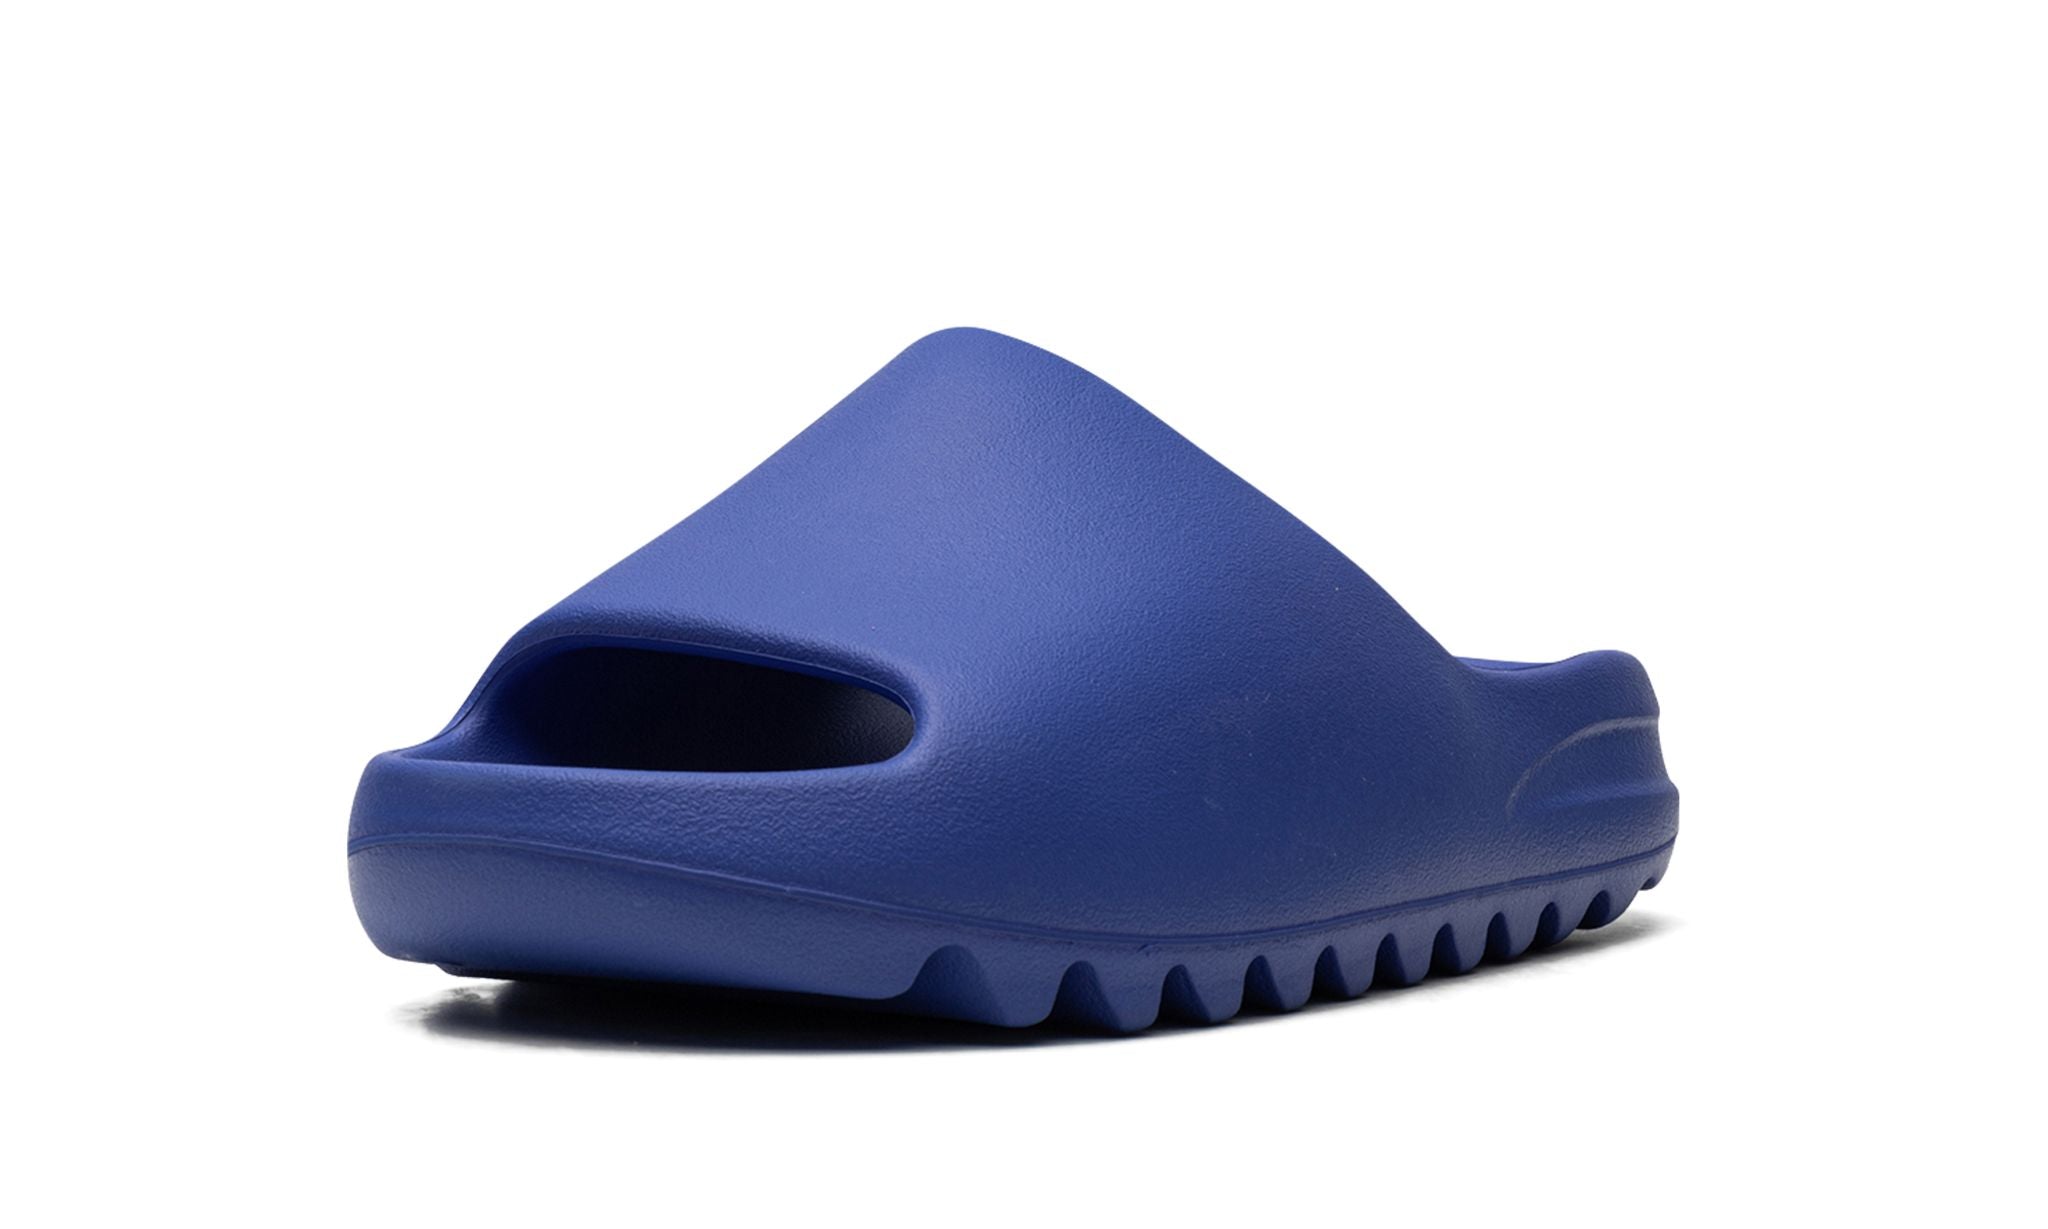 Adidas Yeezy Slide Azure - Yeezy Slide - Pirri